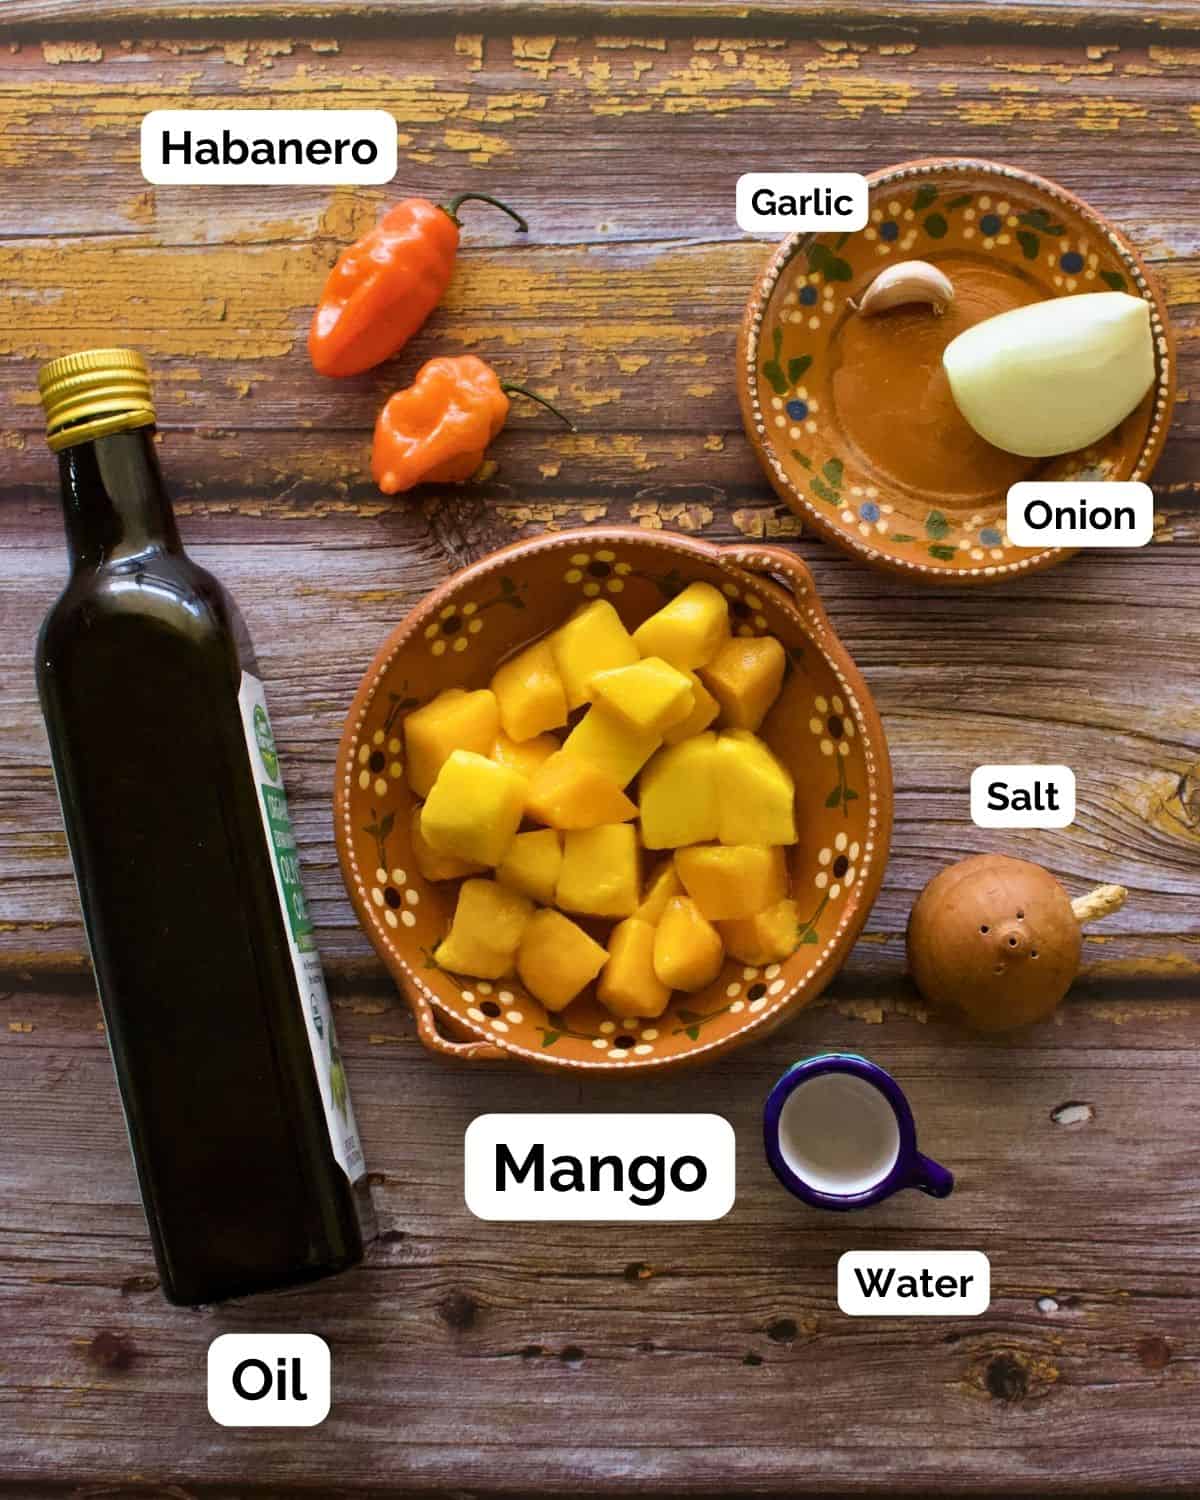 The ingredients needed to make the mango habanero salsa.